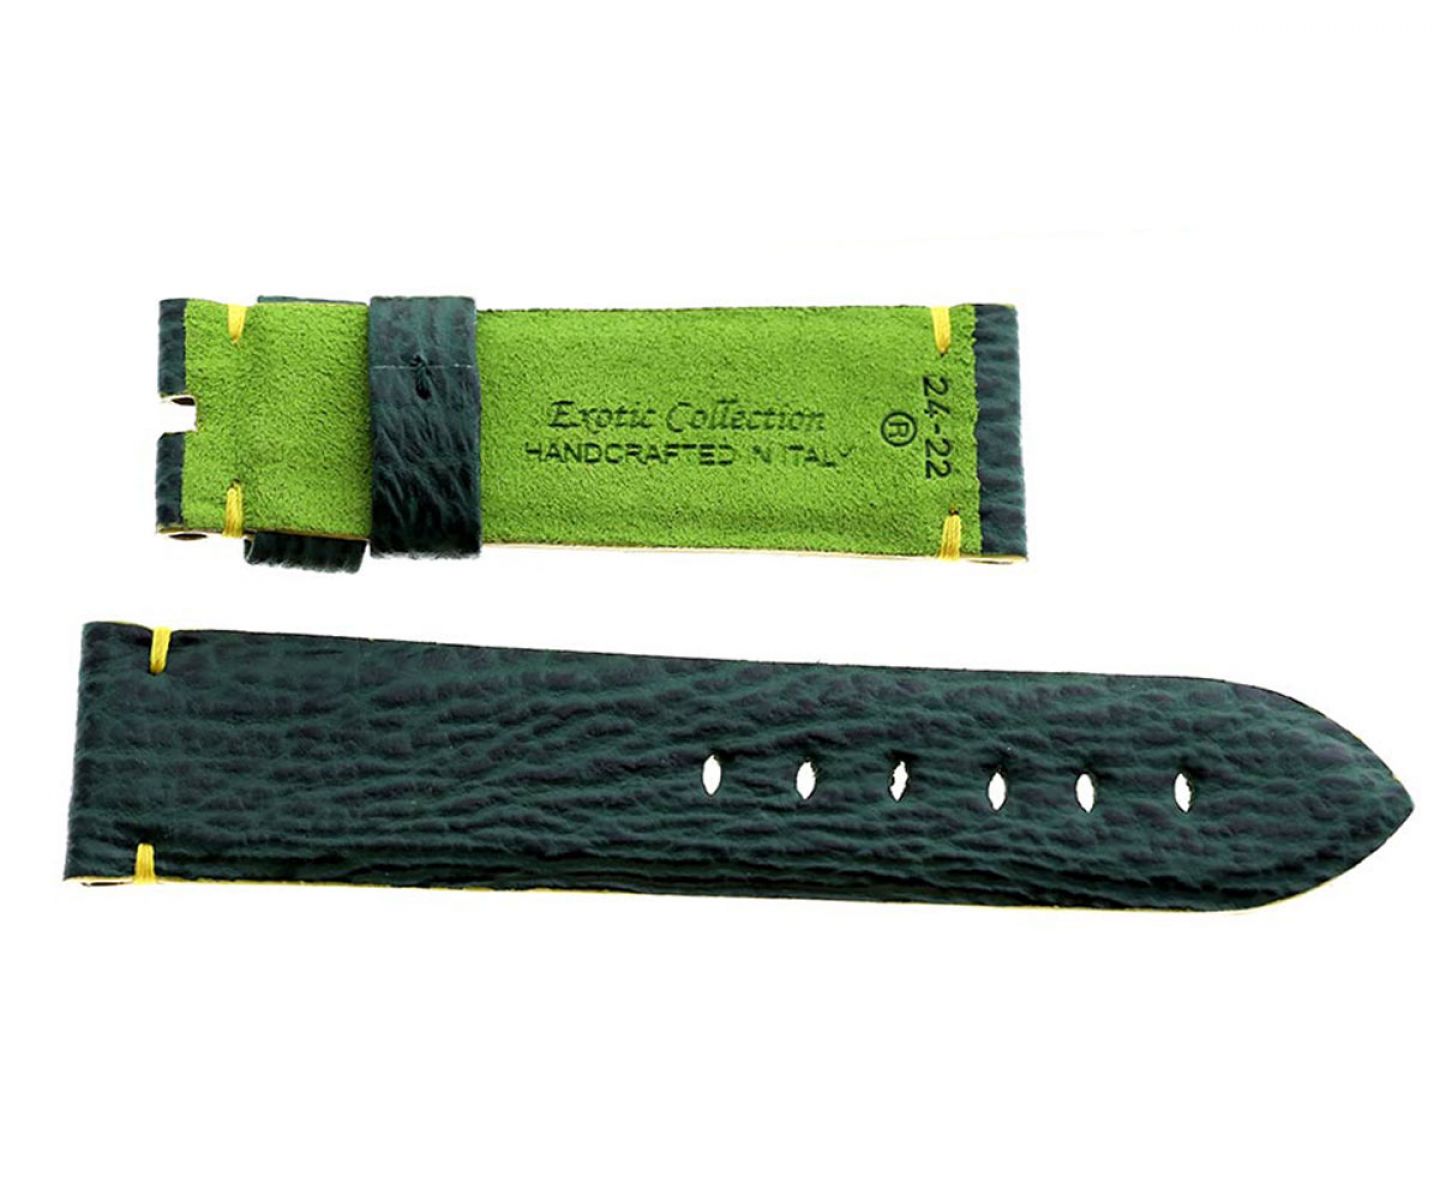 Panerai style strap in Emerald Green Shark leather